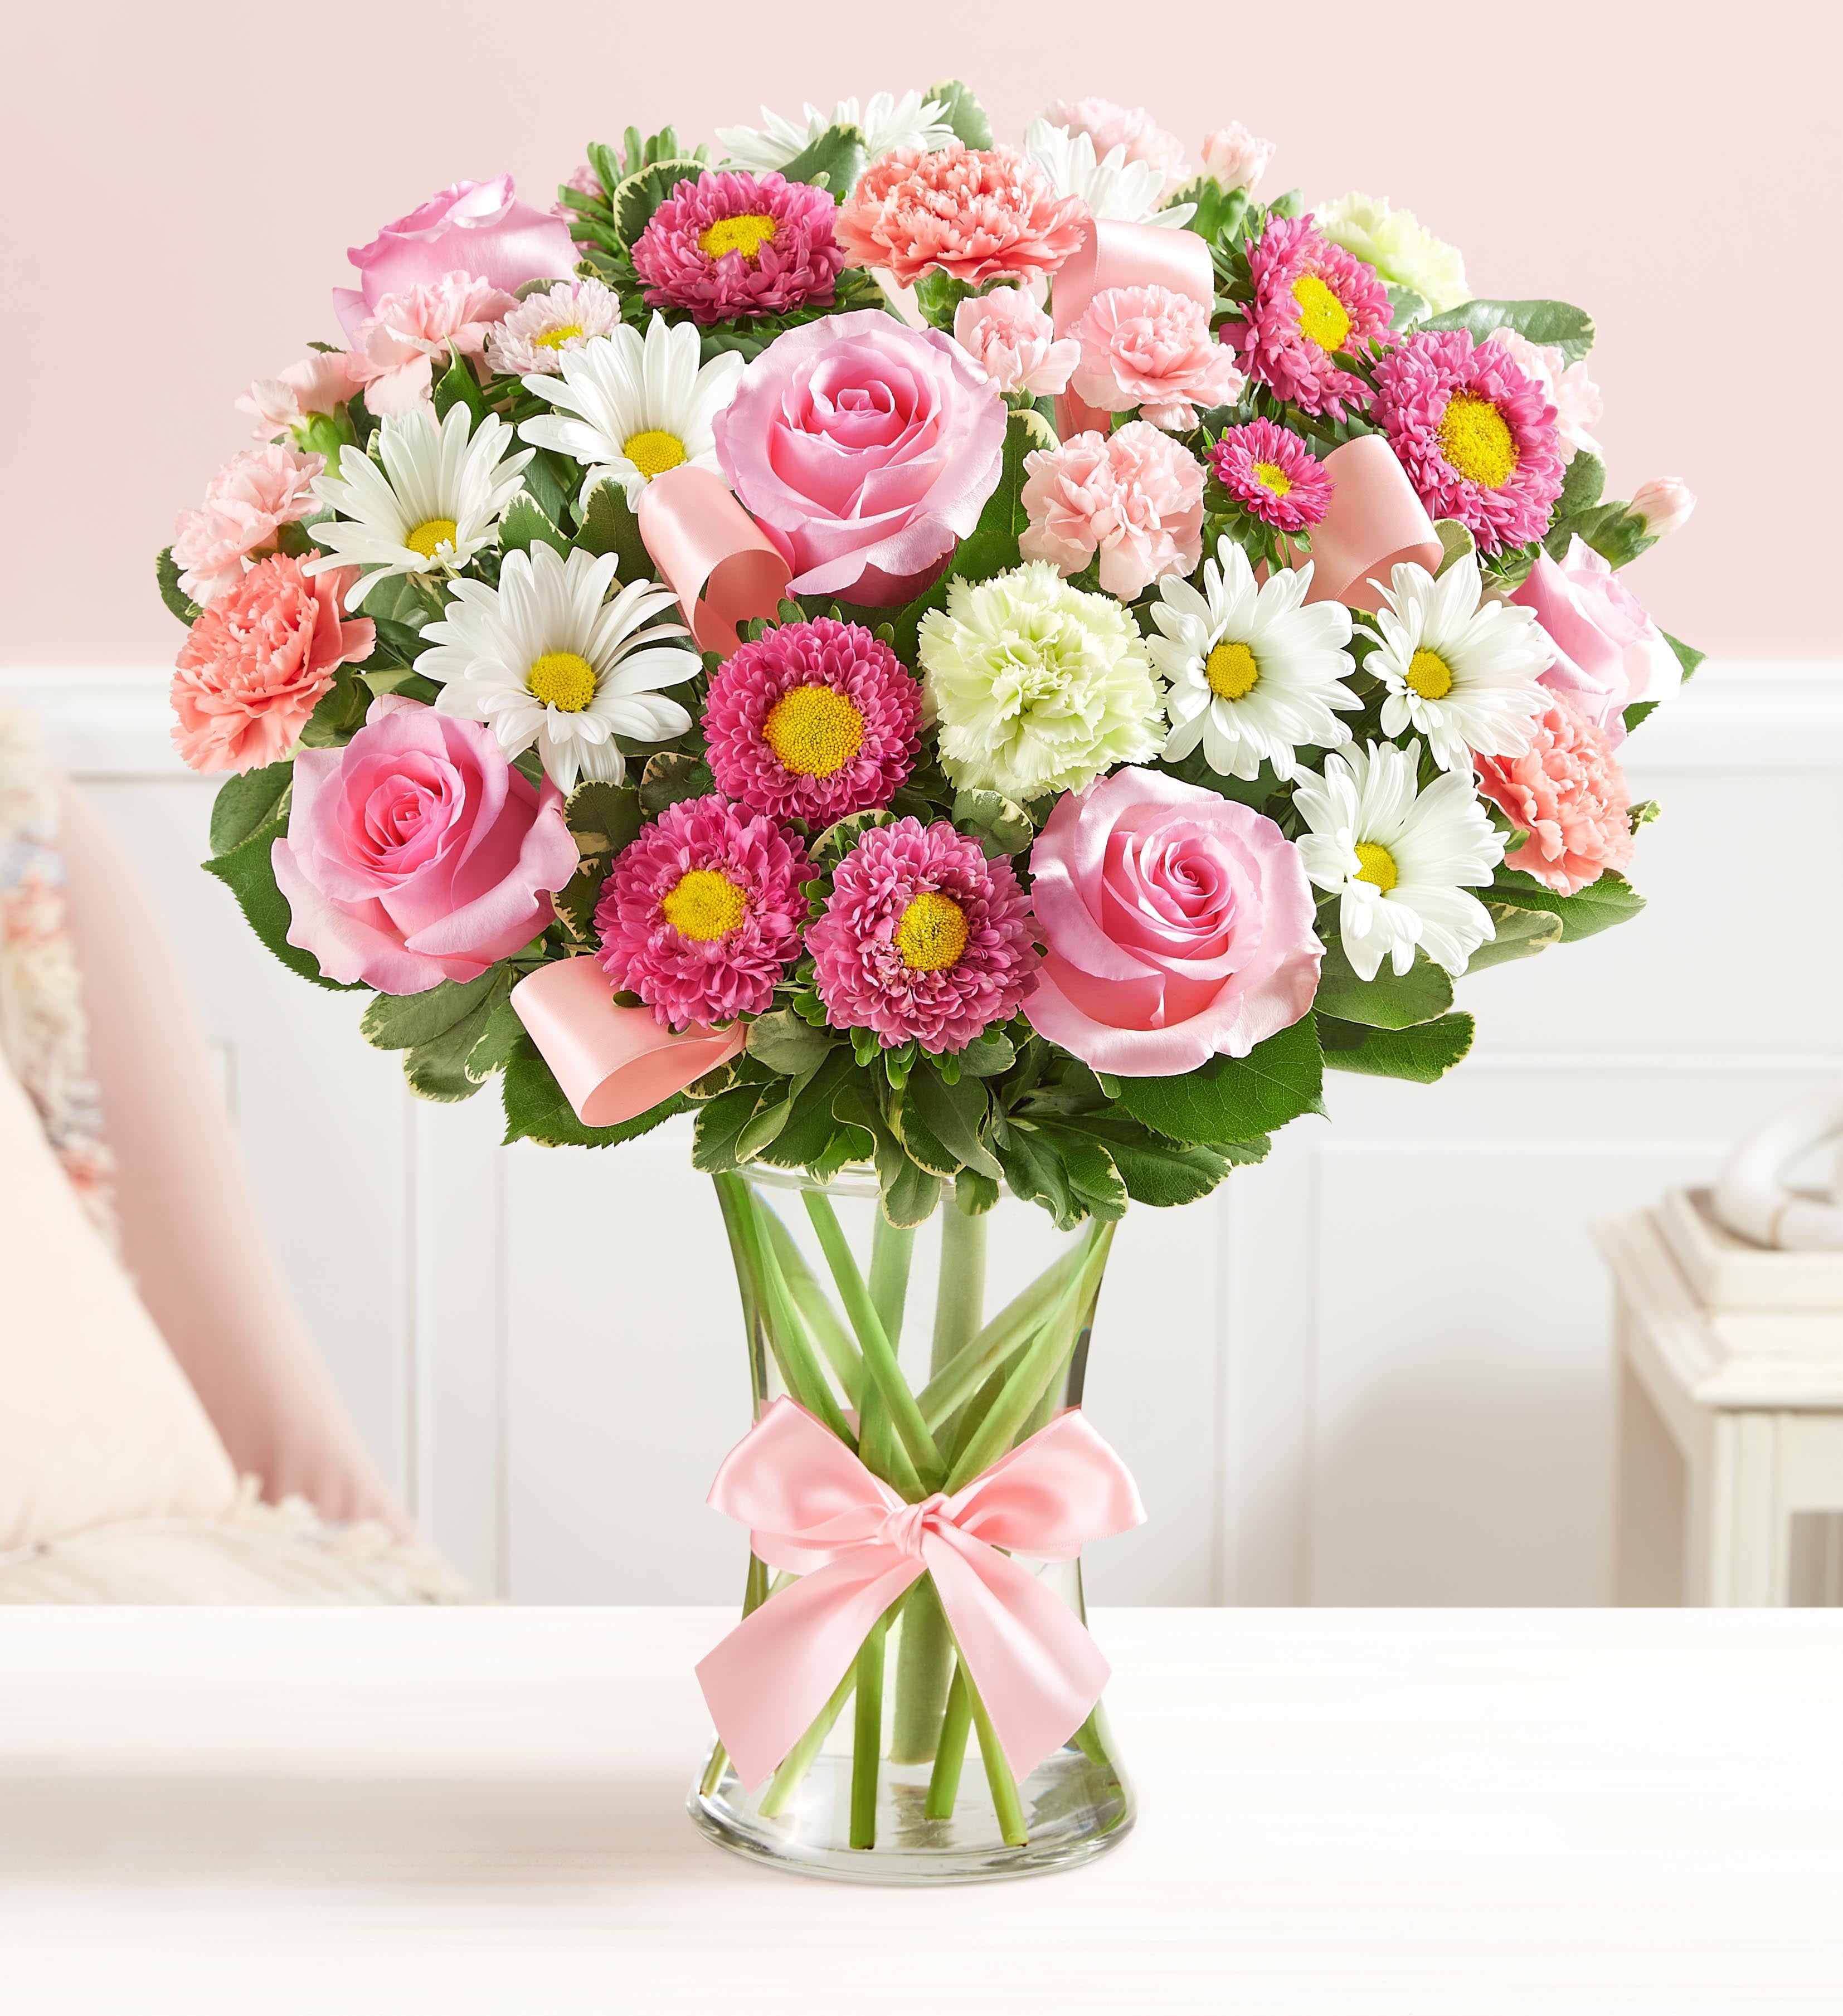 https://cdn1.1800flowers.com/wcsstore/Flowers/images/catalog/191378lx.jpg